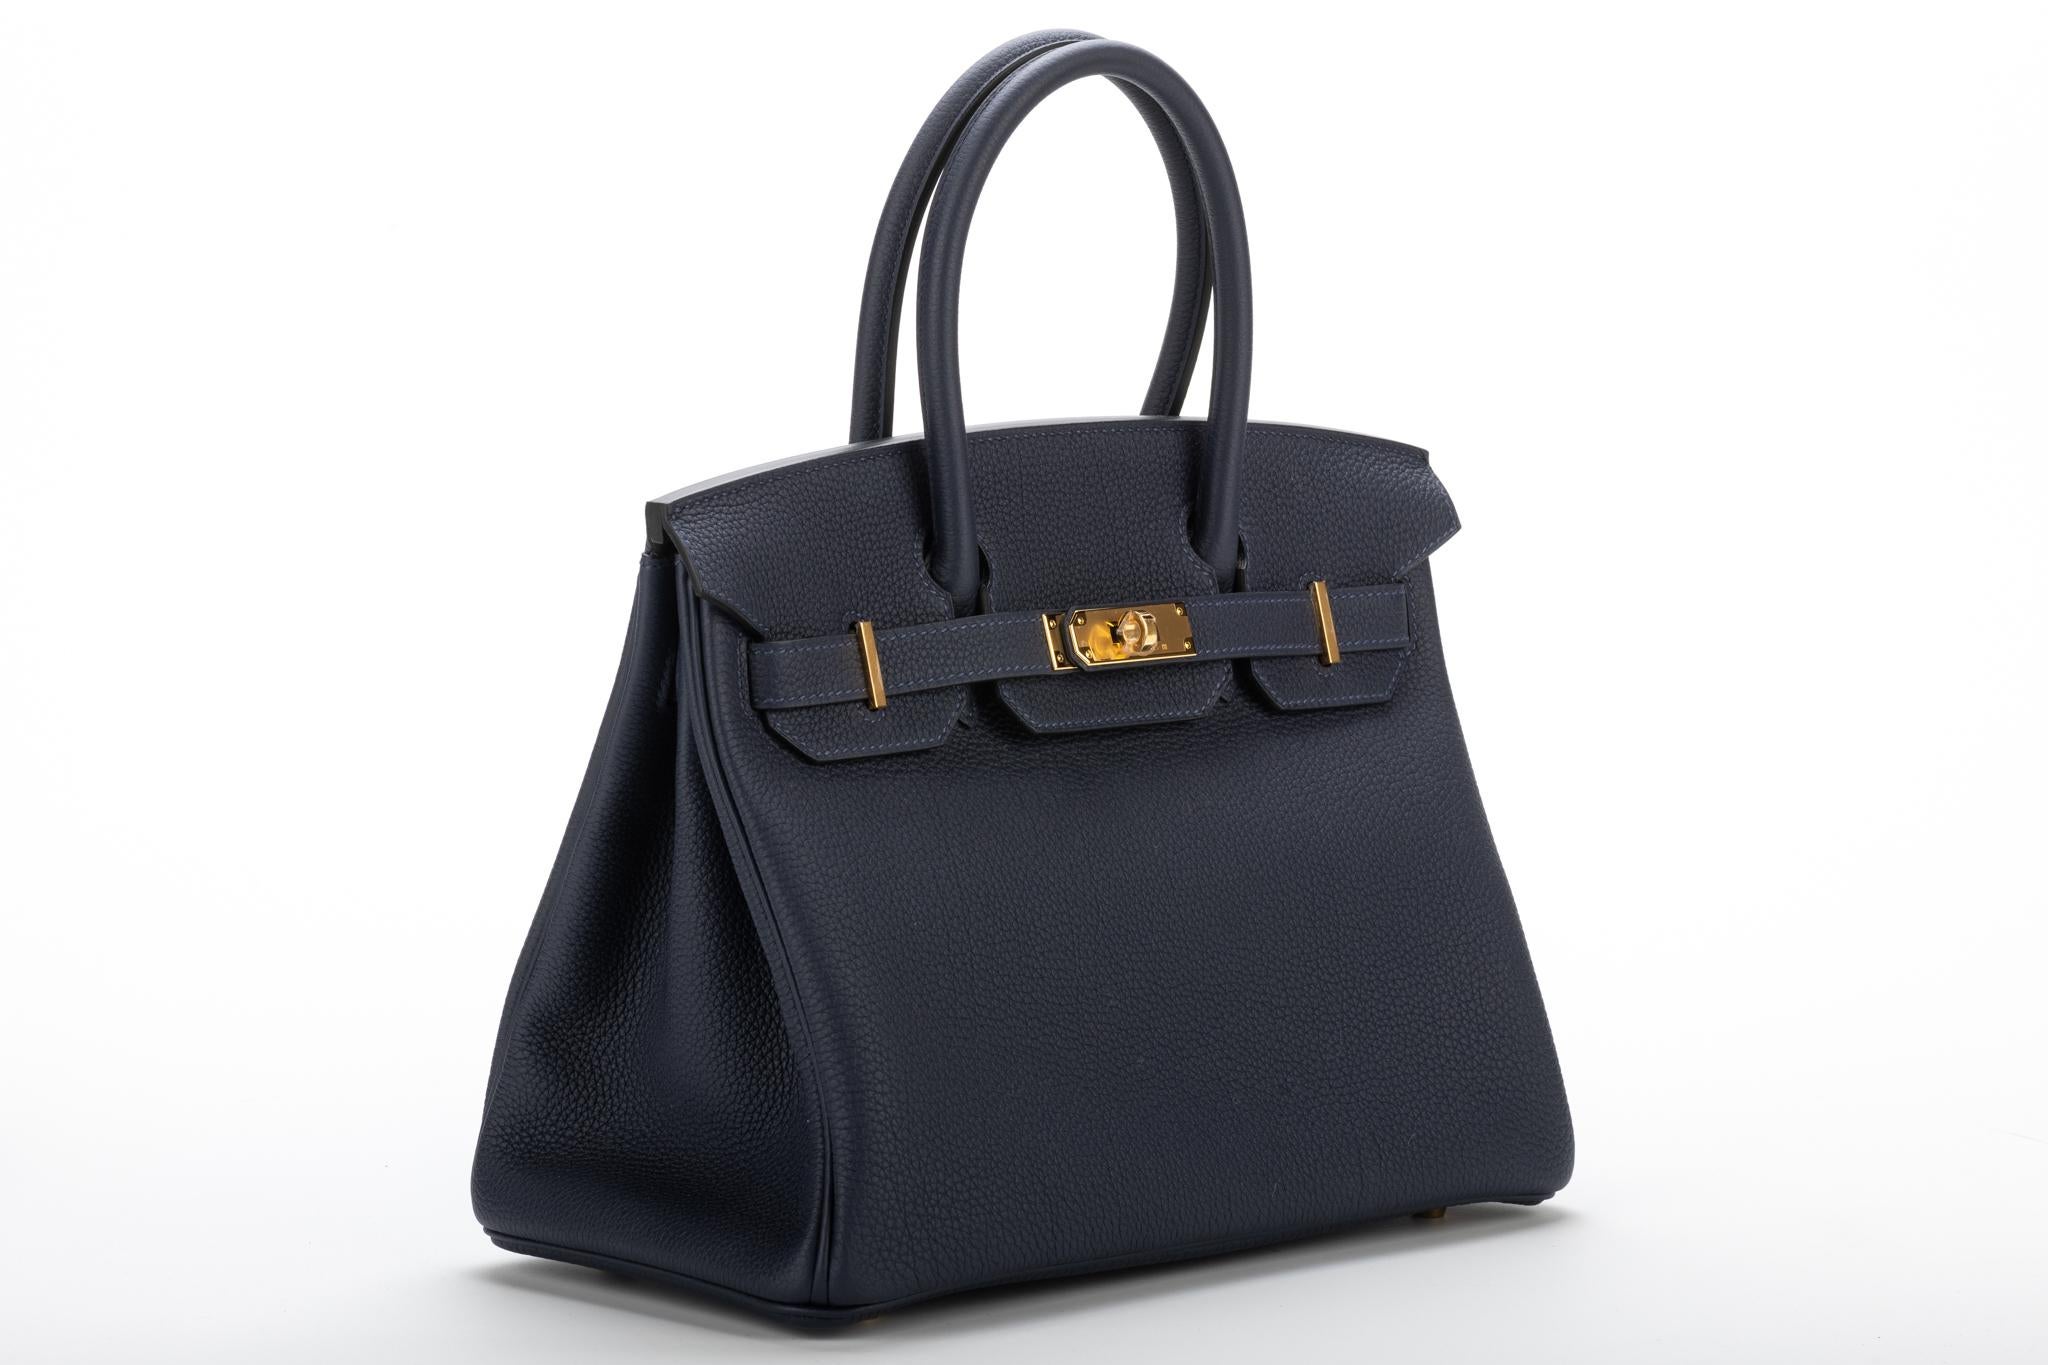 Hermès 30cm Birkin in blue nuit togo leather with gold tone hardware. Handle drop, 3.75